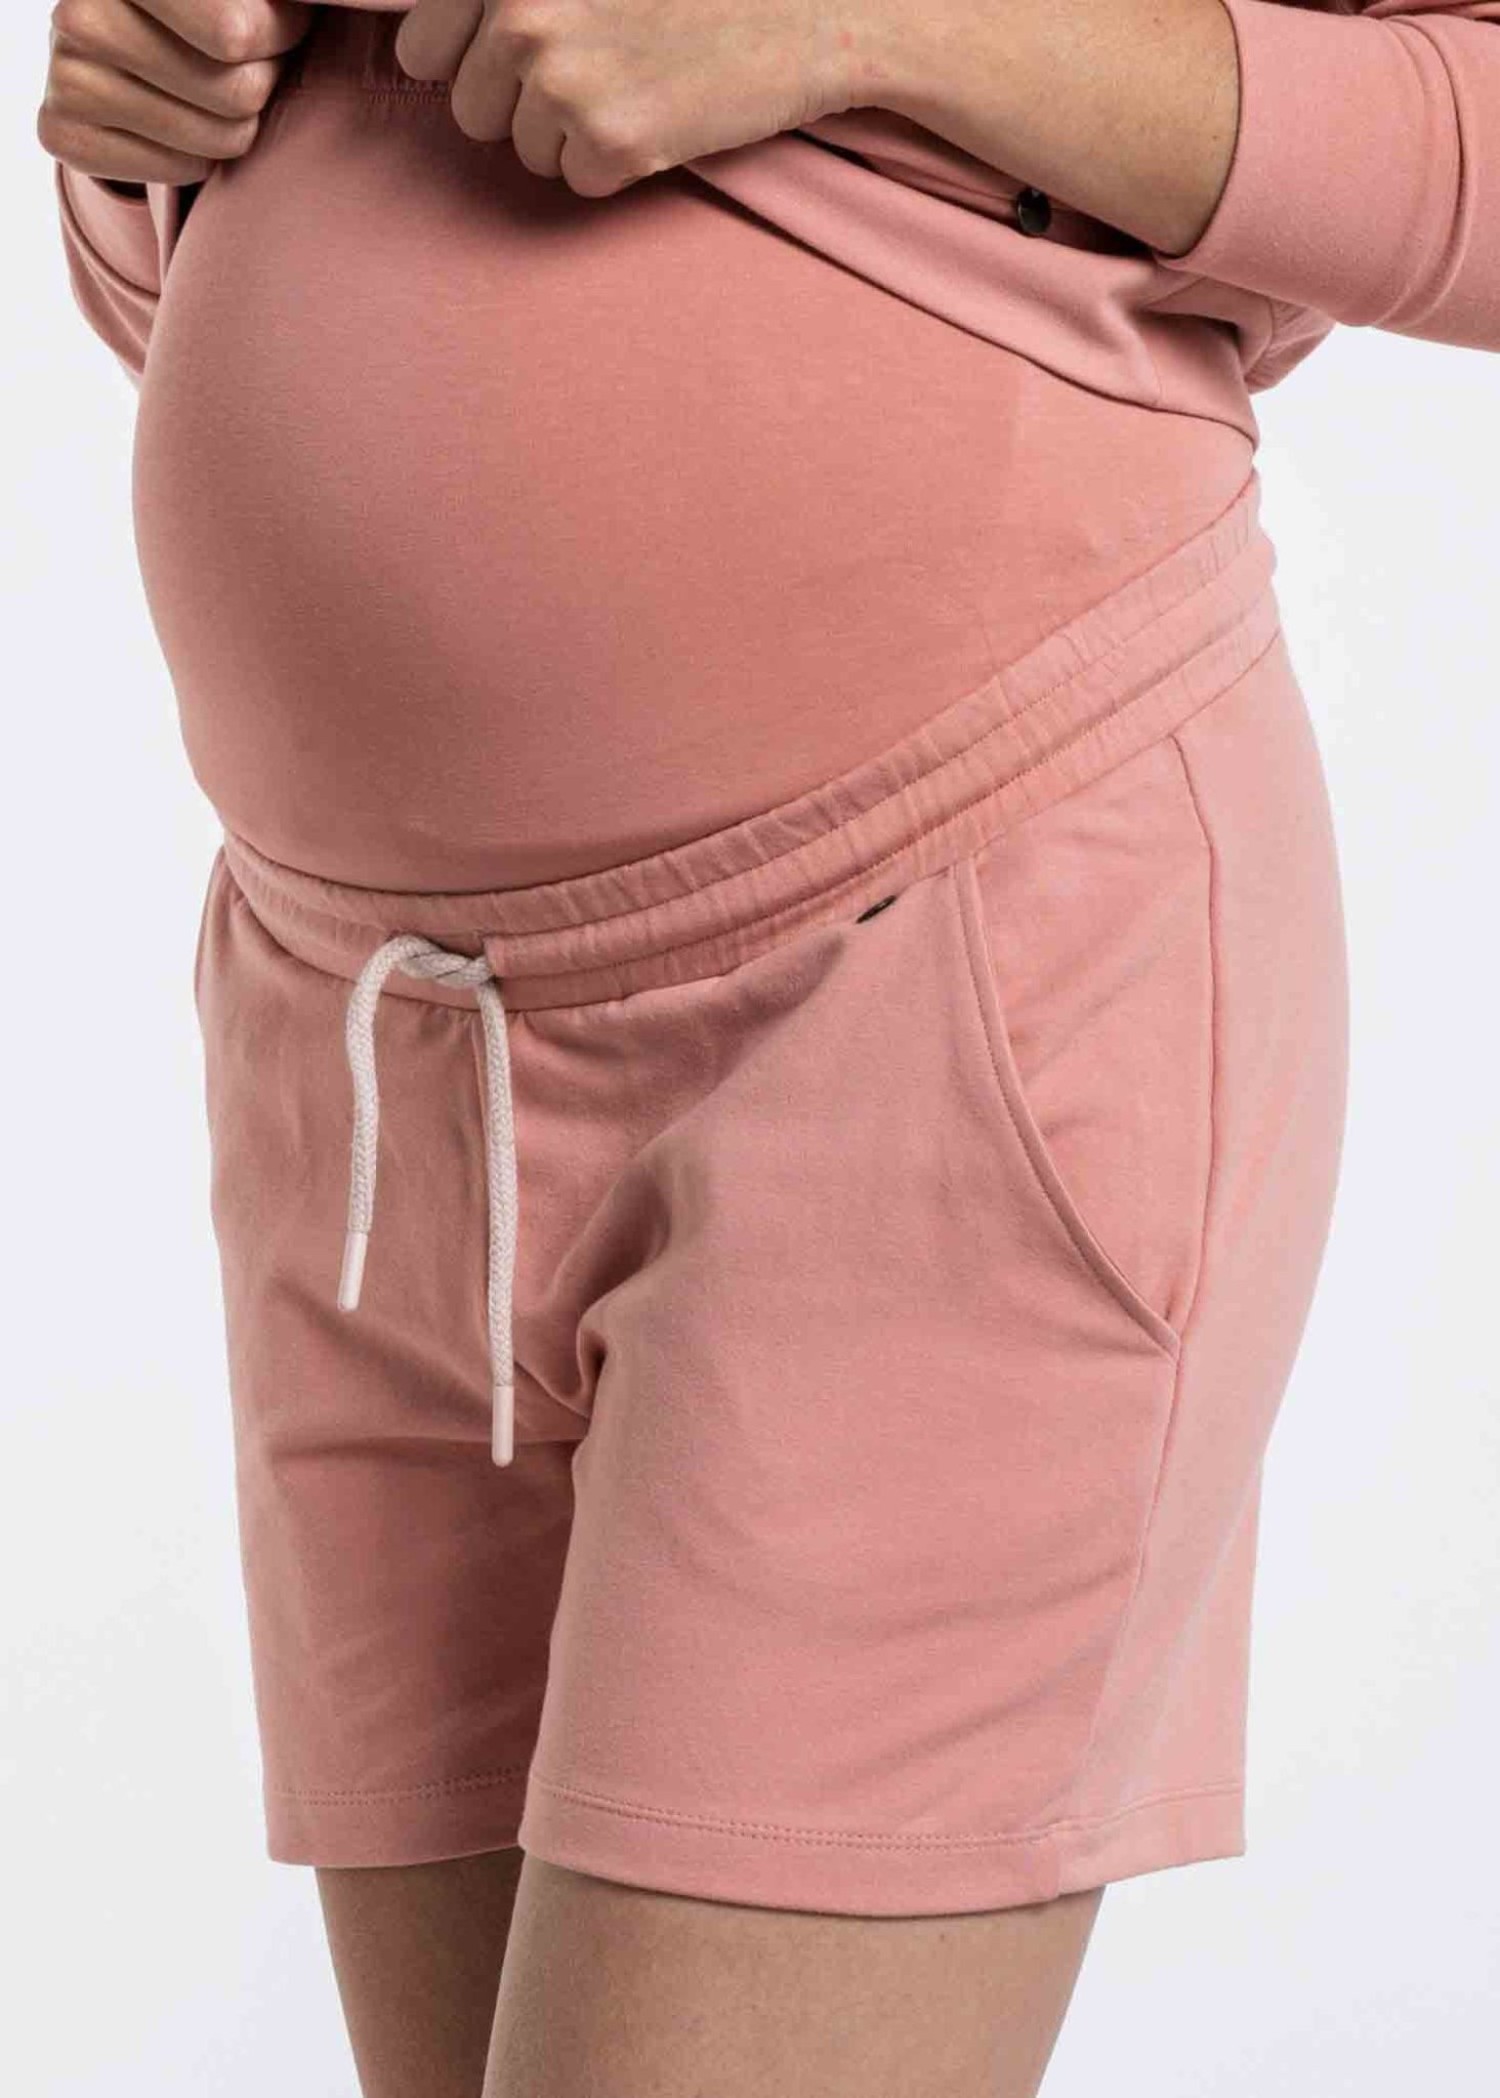 https://cdn.shoplightspeed.com/shops/616157/files/52663692/1500x4000x3/love2wait-love2wait-women-maternity-shorts.jpg